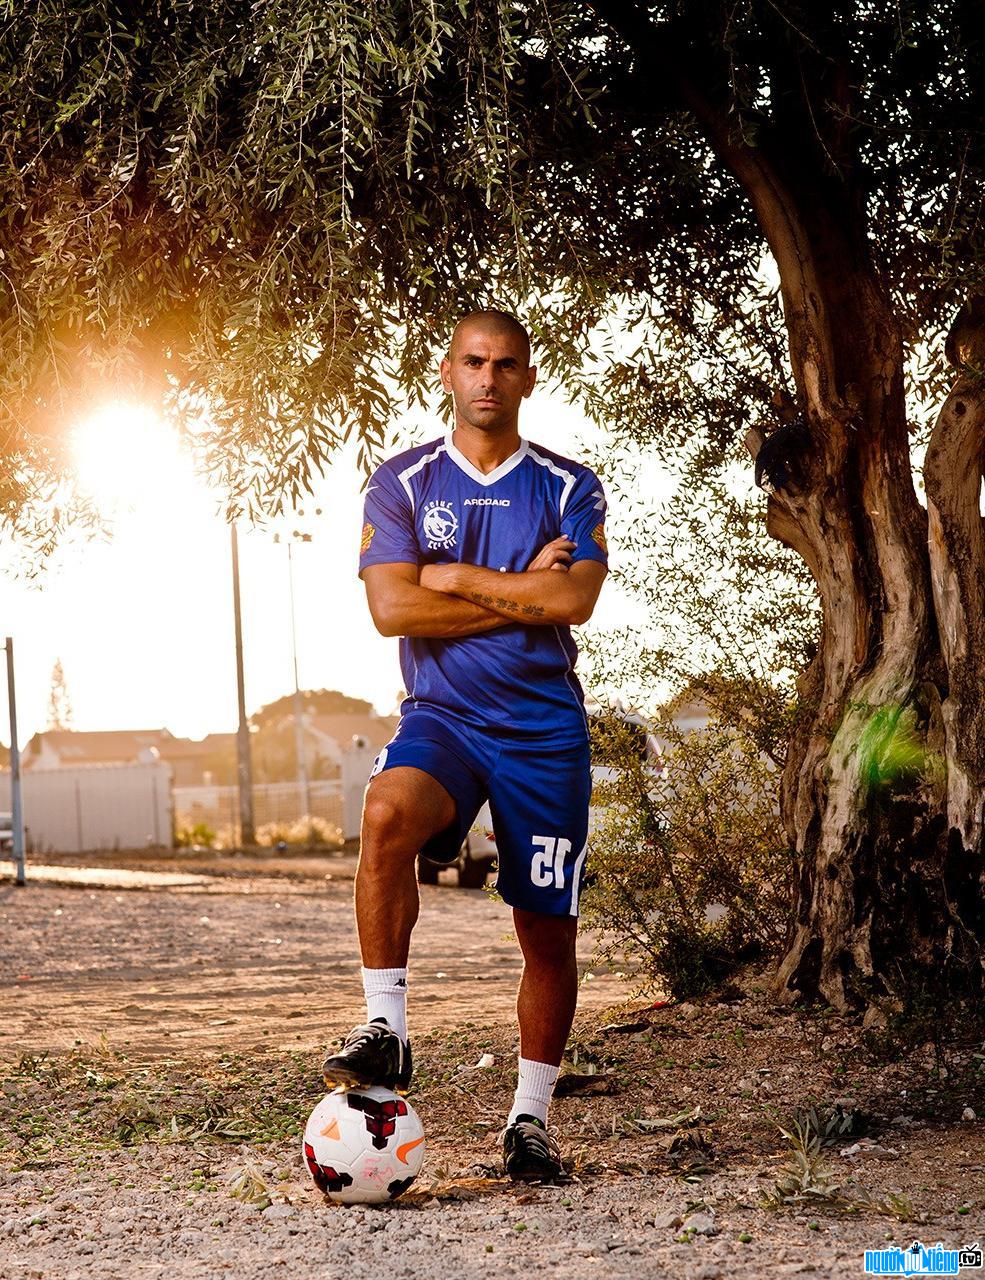 Salim Tuama image - famous Israeli player